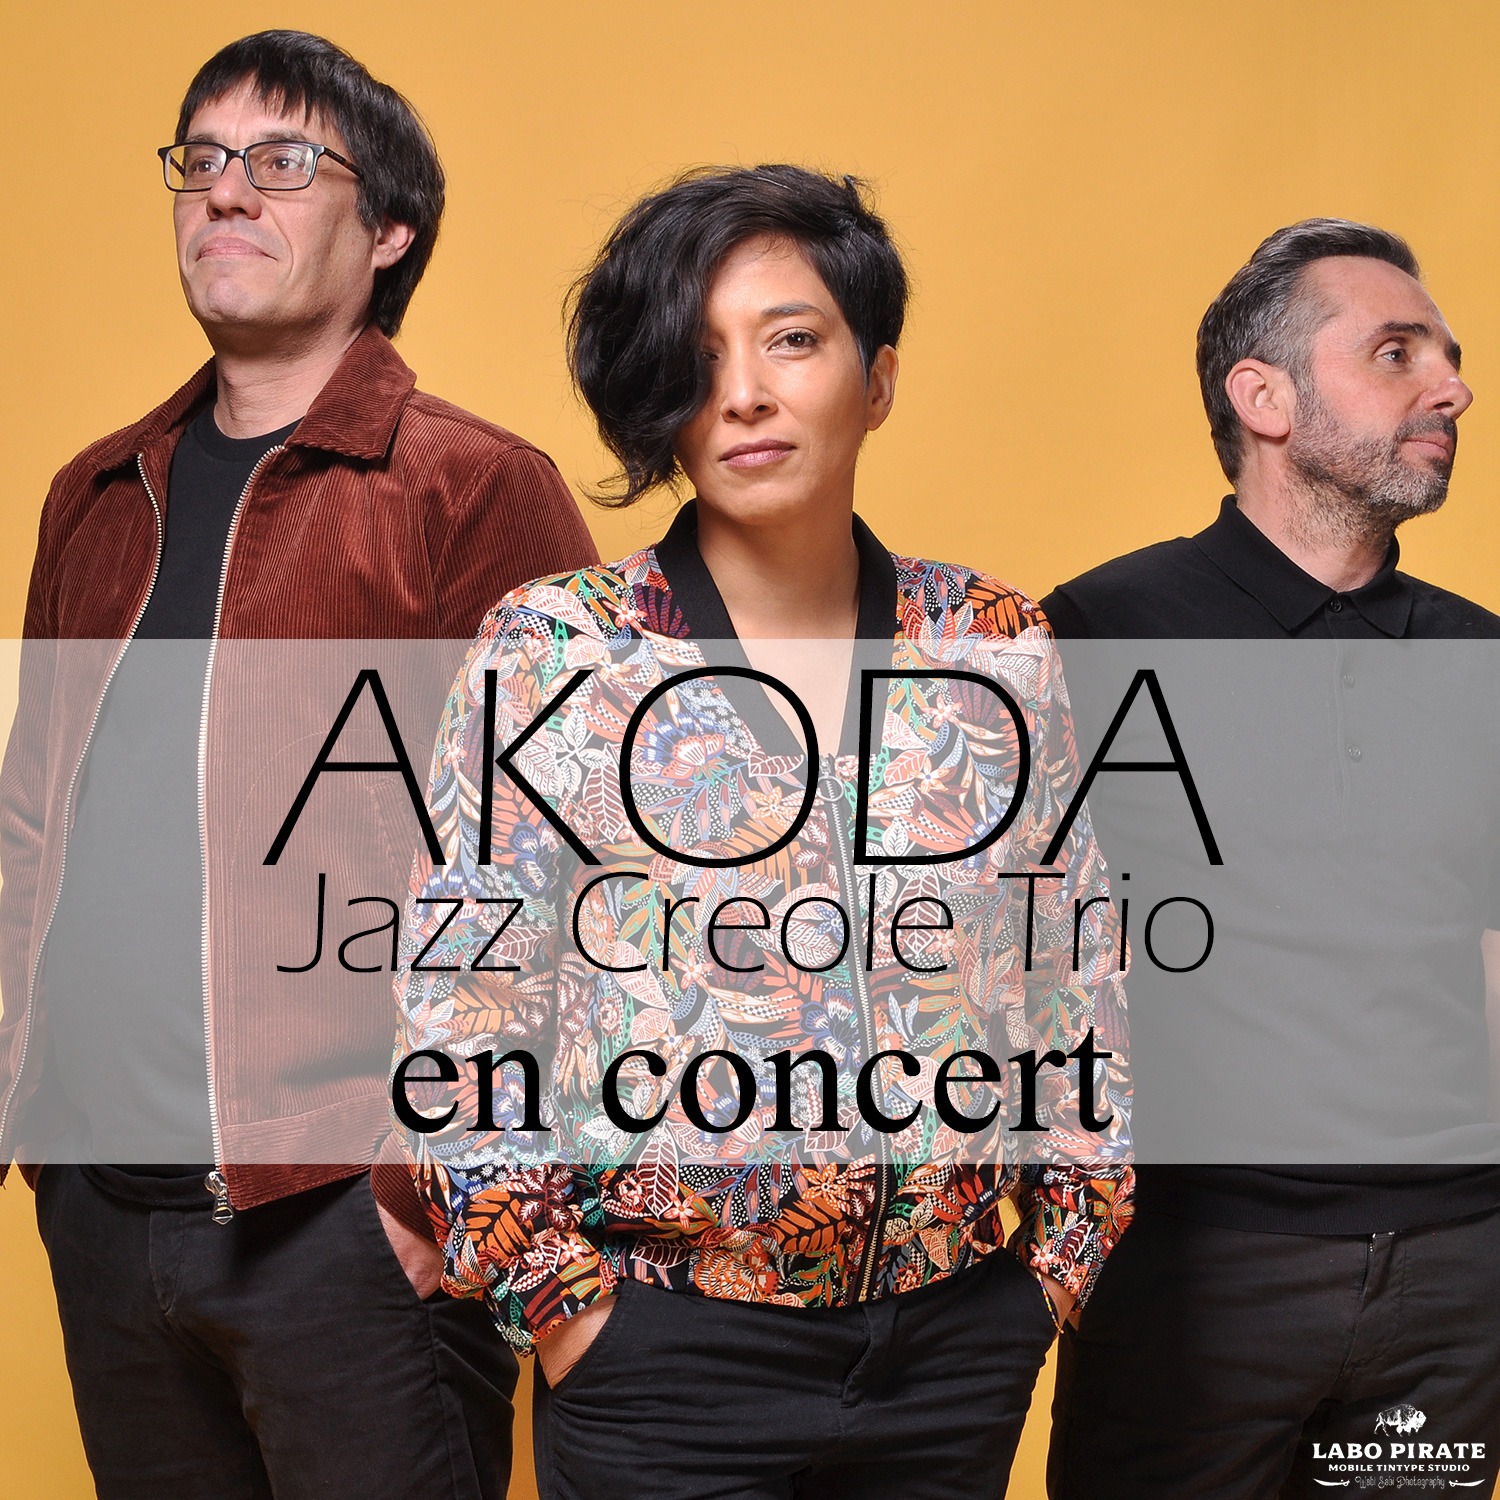 Akoda, jazz créole trio